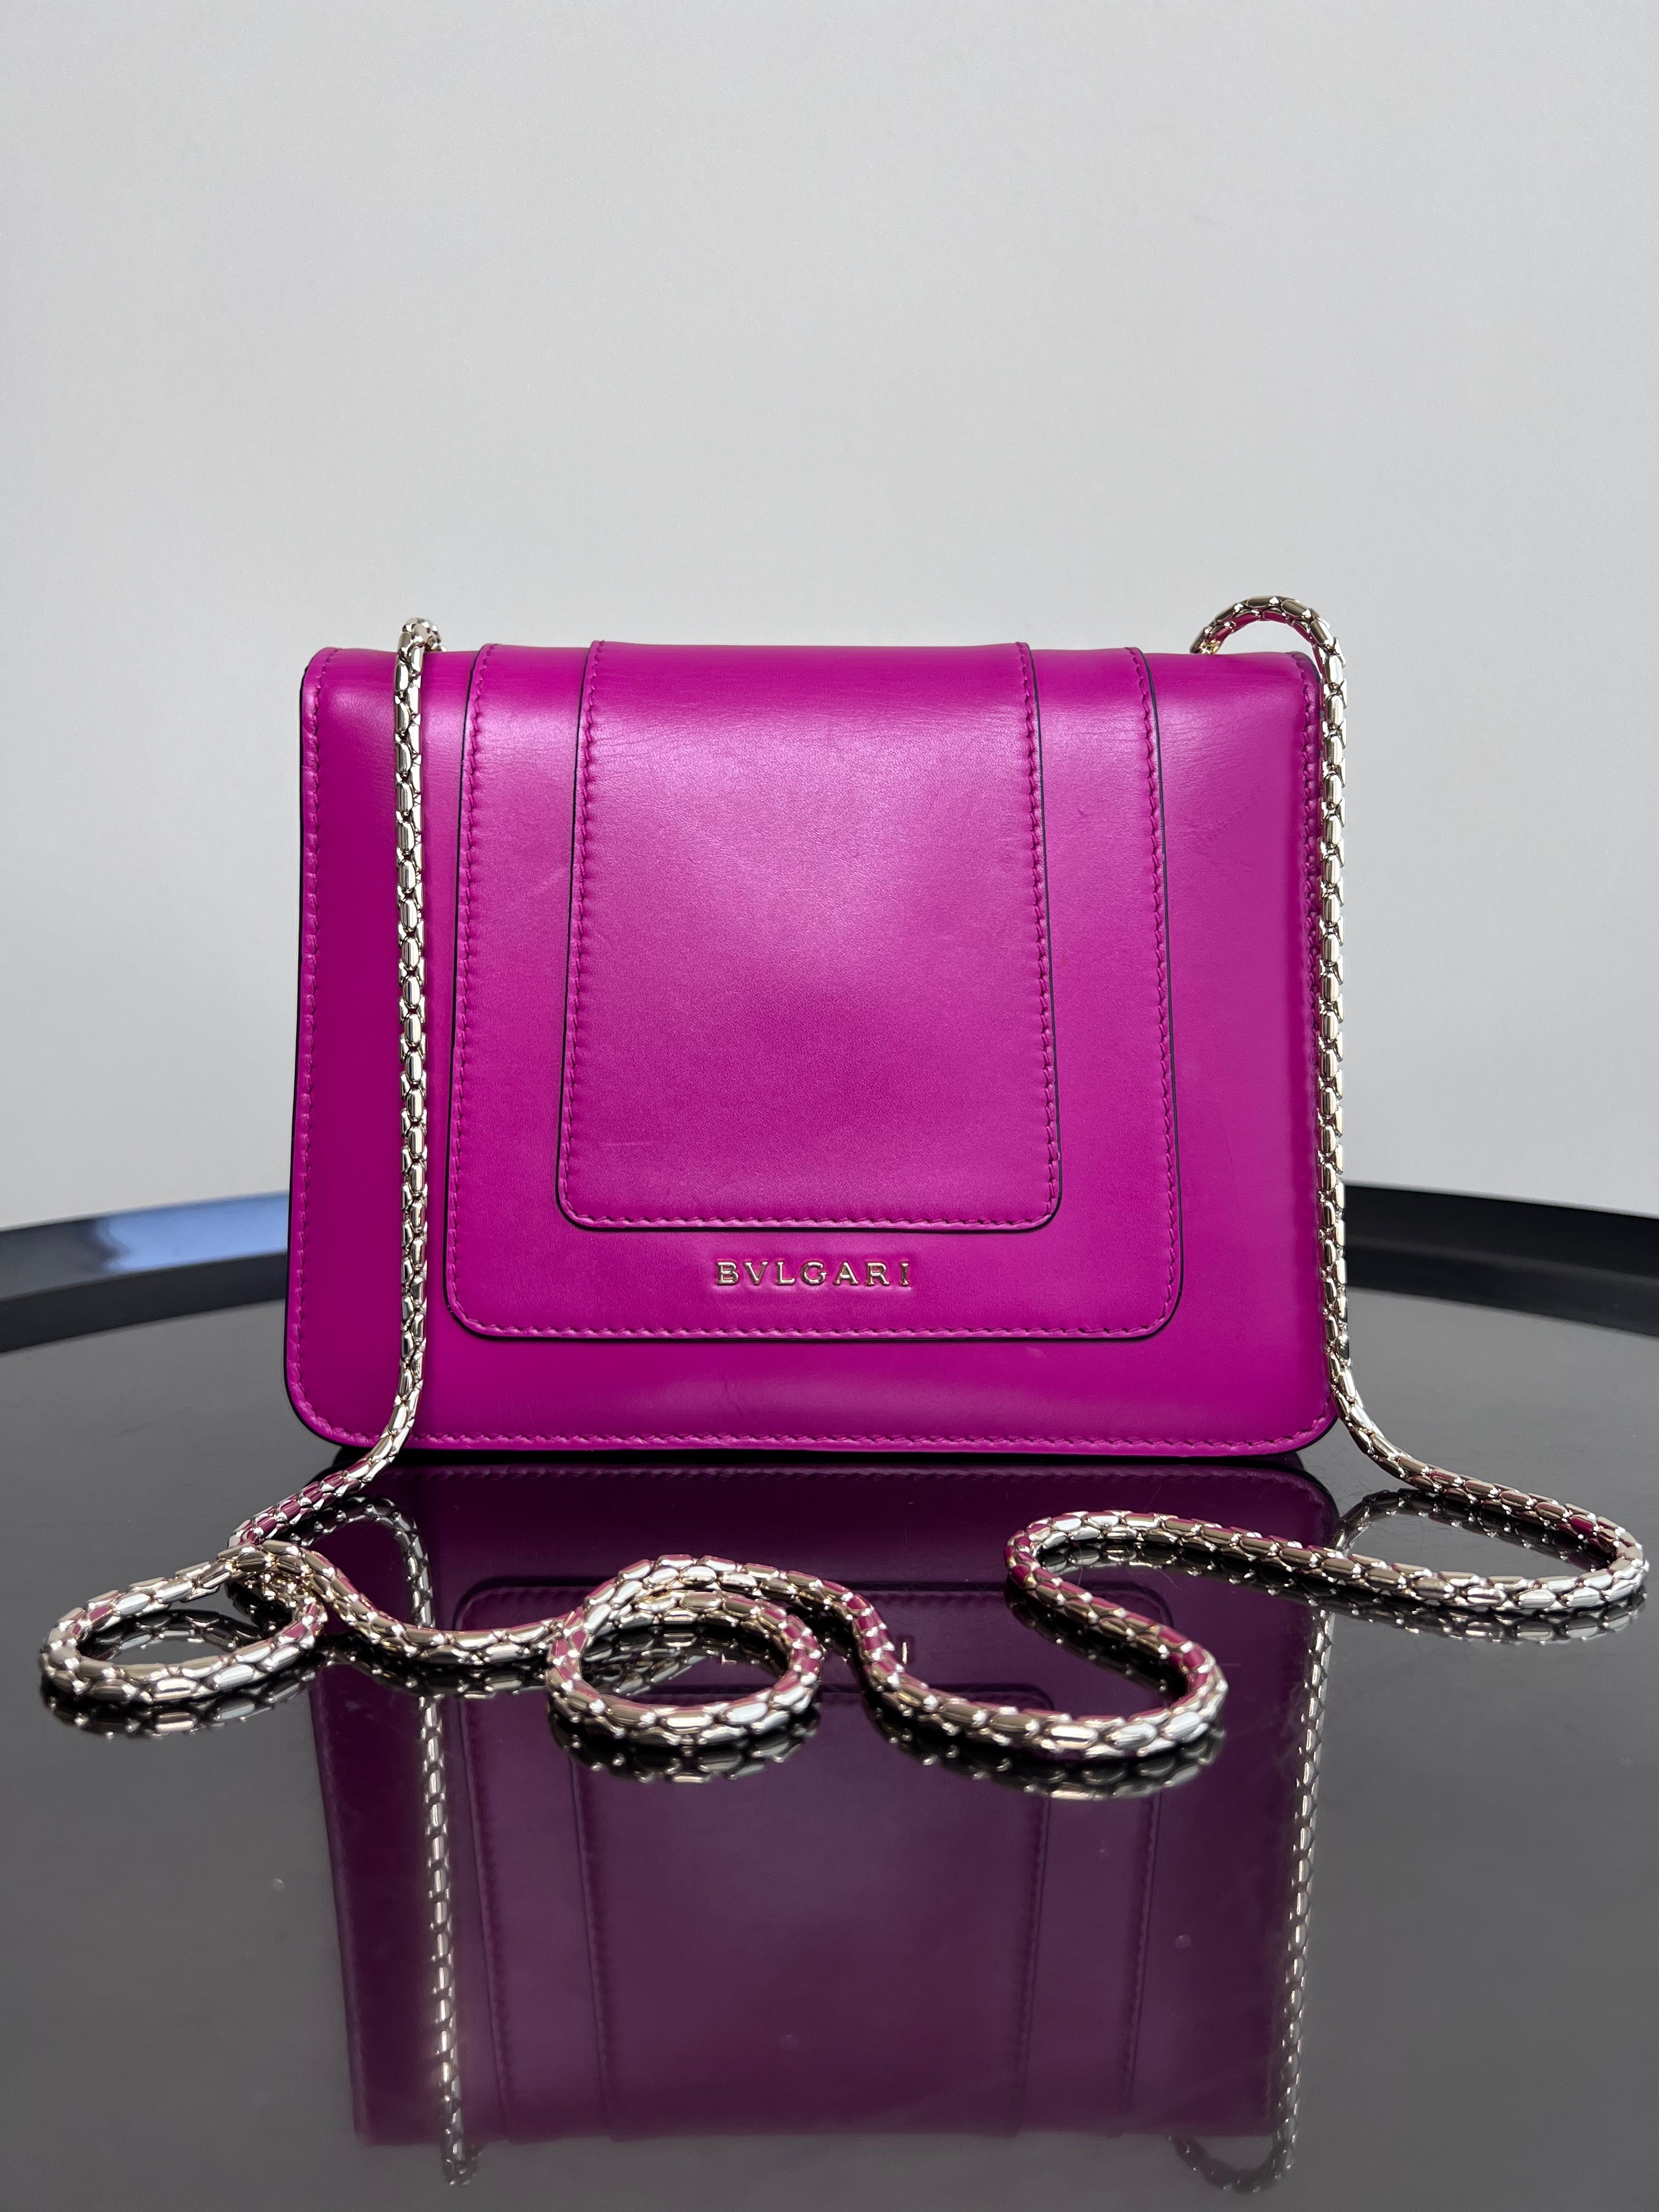 Serpenti Forever small crossbody bag in Purple Pink - BVLGARI